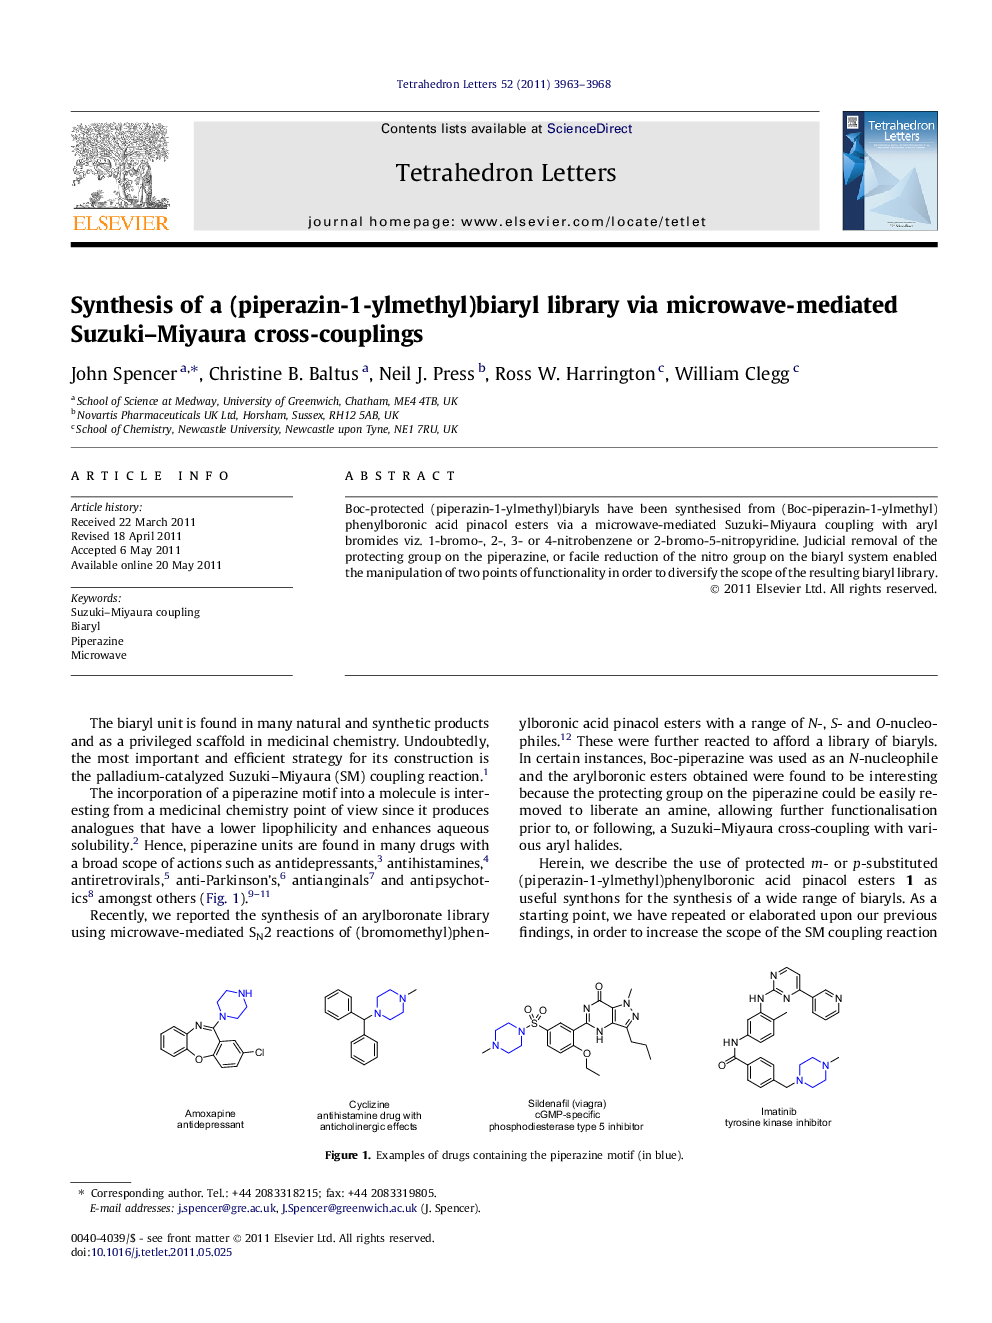 Synthesis of a (piperazin-1-ylmethyl)biaryl library via microwave-mediated Suzuki-Miyaura cross-couplings